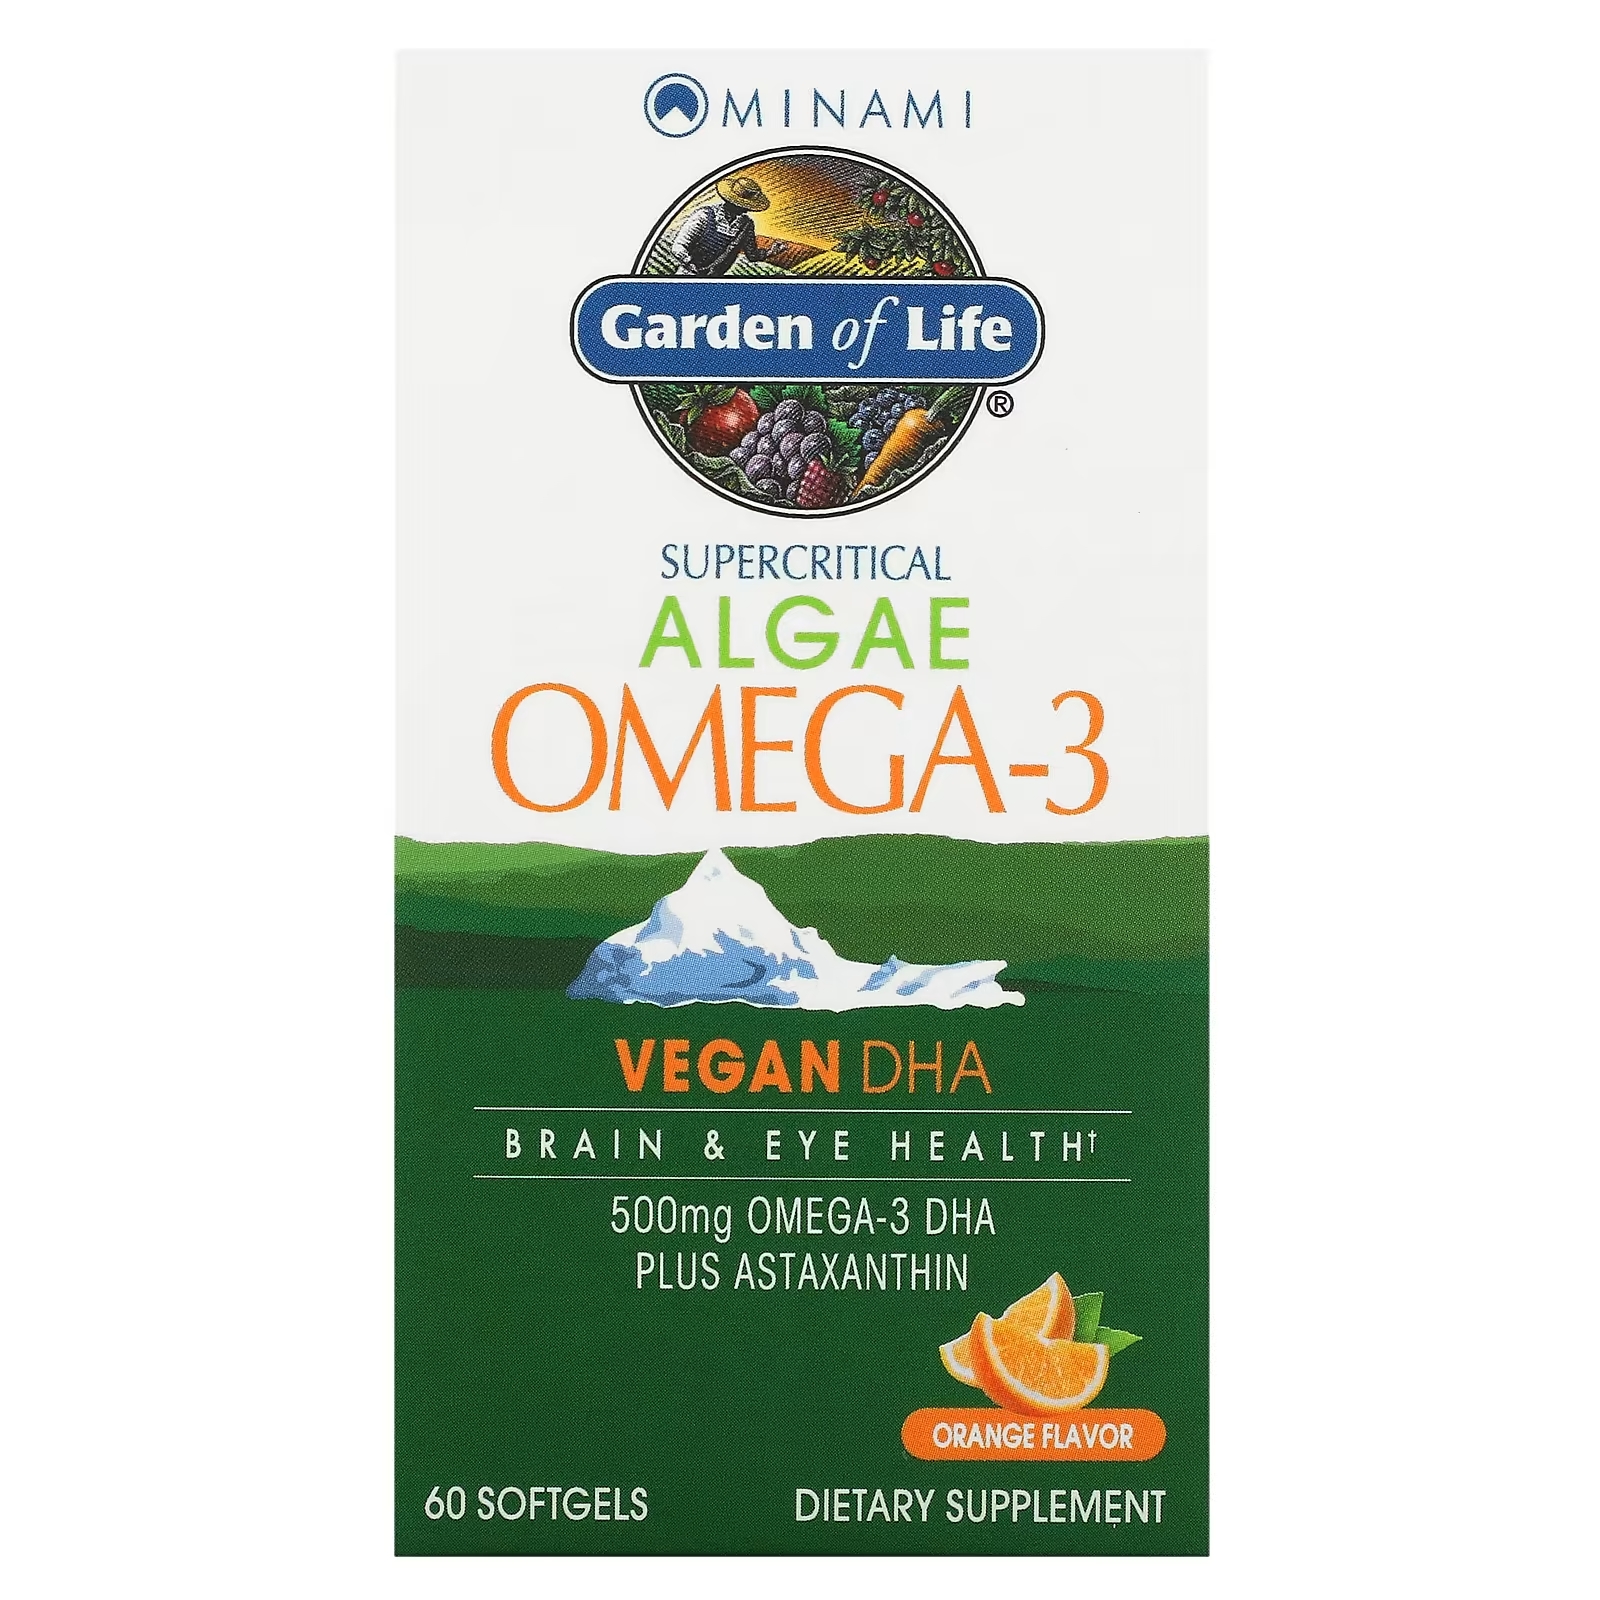 Minami Nutrition Algae Omega-3 апельсиновый вкус, 60 мягких таблеток